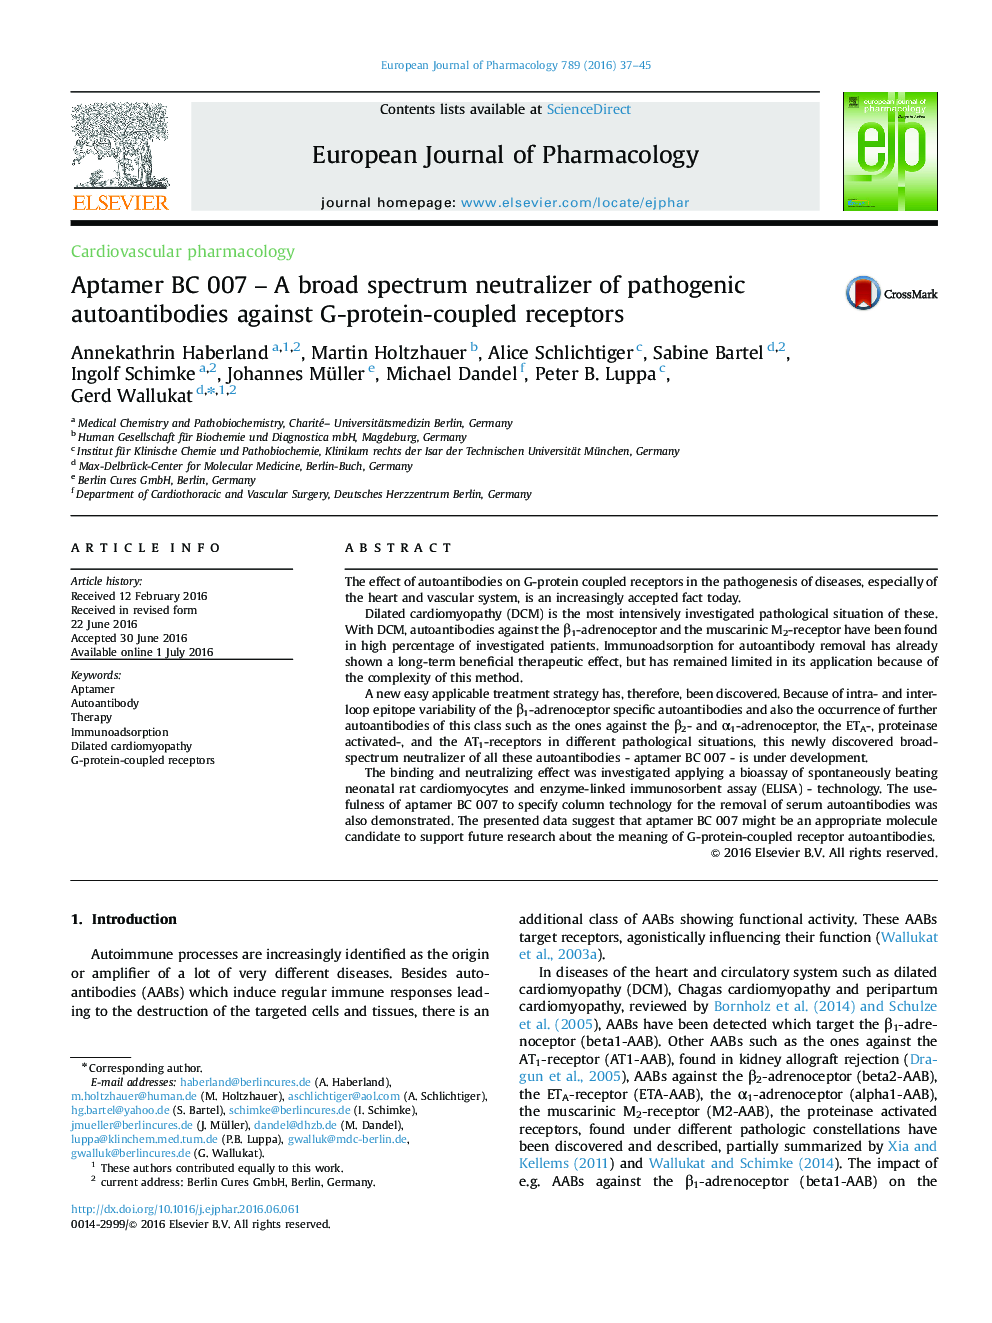 Aptamer BC 007 – A broad spectrum neutralizer of pathogenic autoantibodies against G-protein-coupled receptors